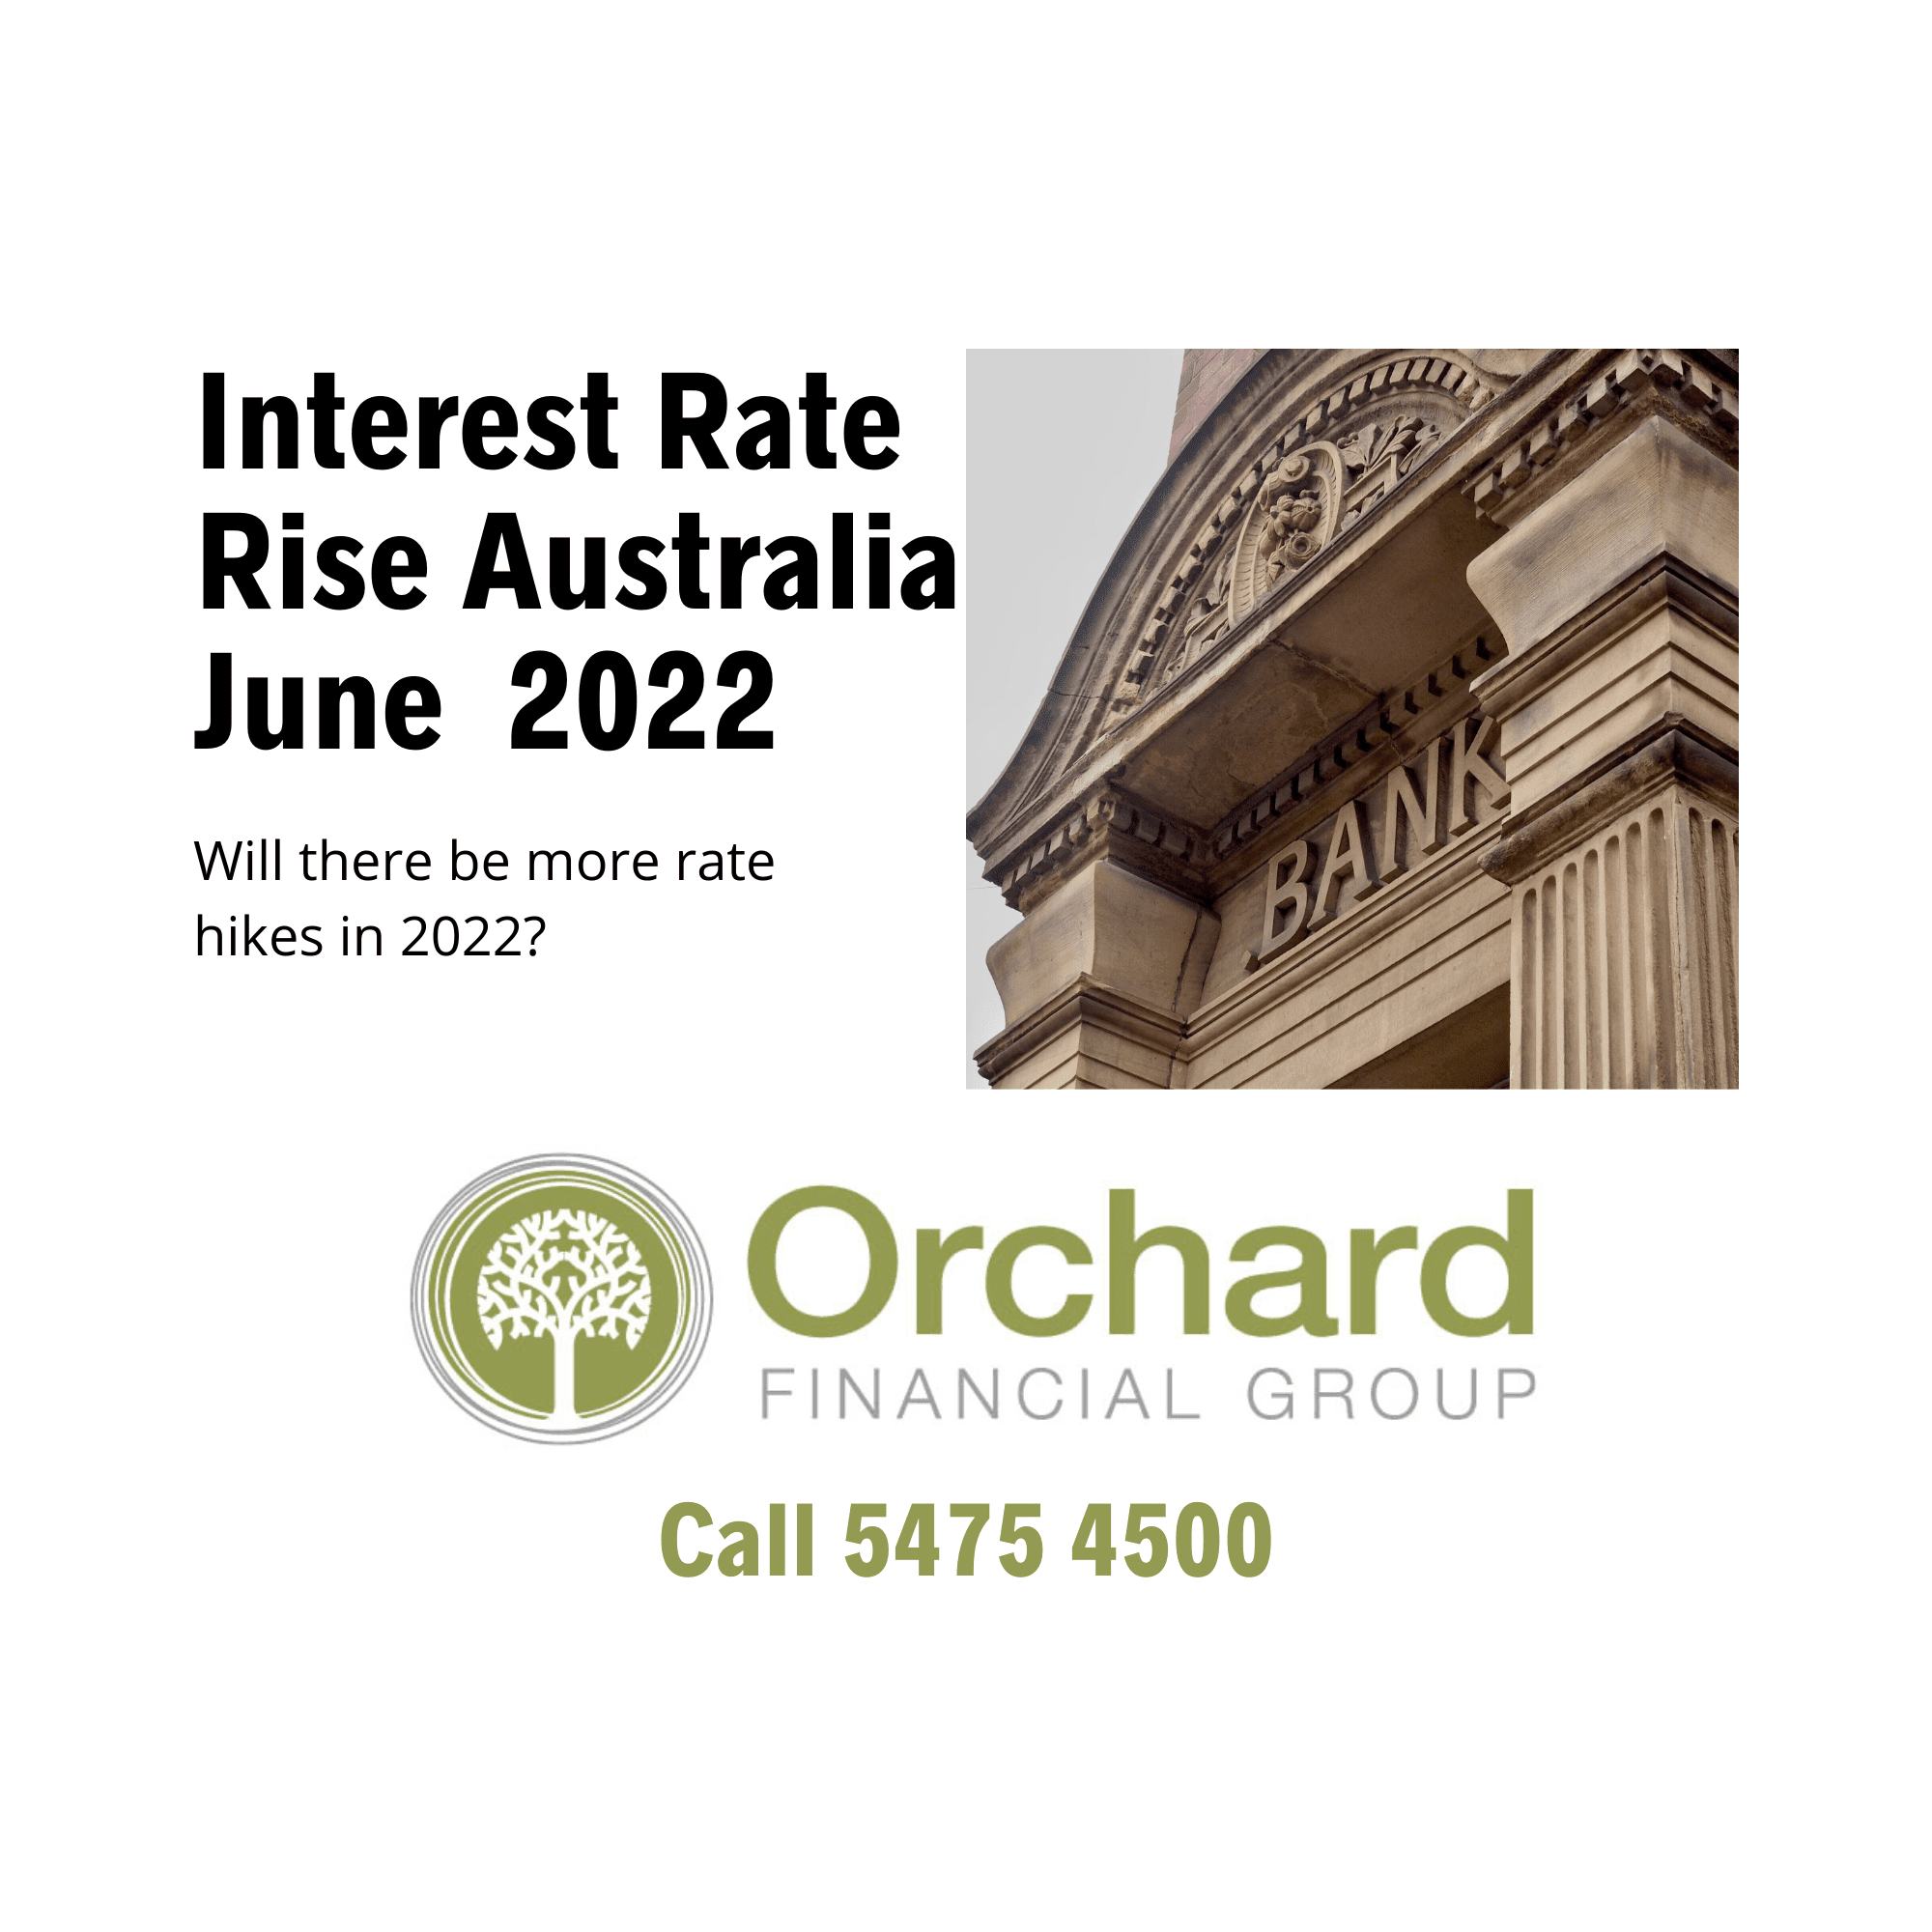 Interest Rate Rise Australia June 2022 | Sunshine Coast Mortgage Brokers | Orchard Mortgages